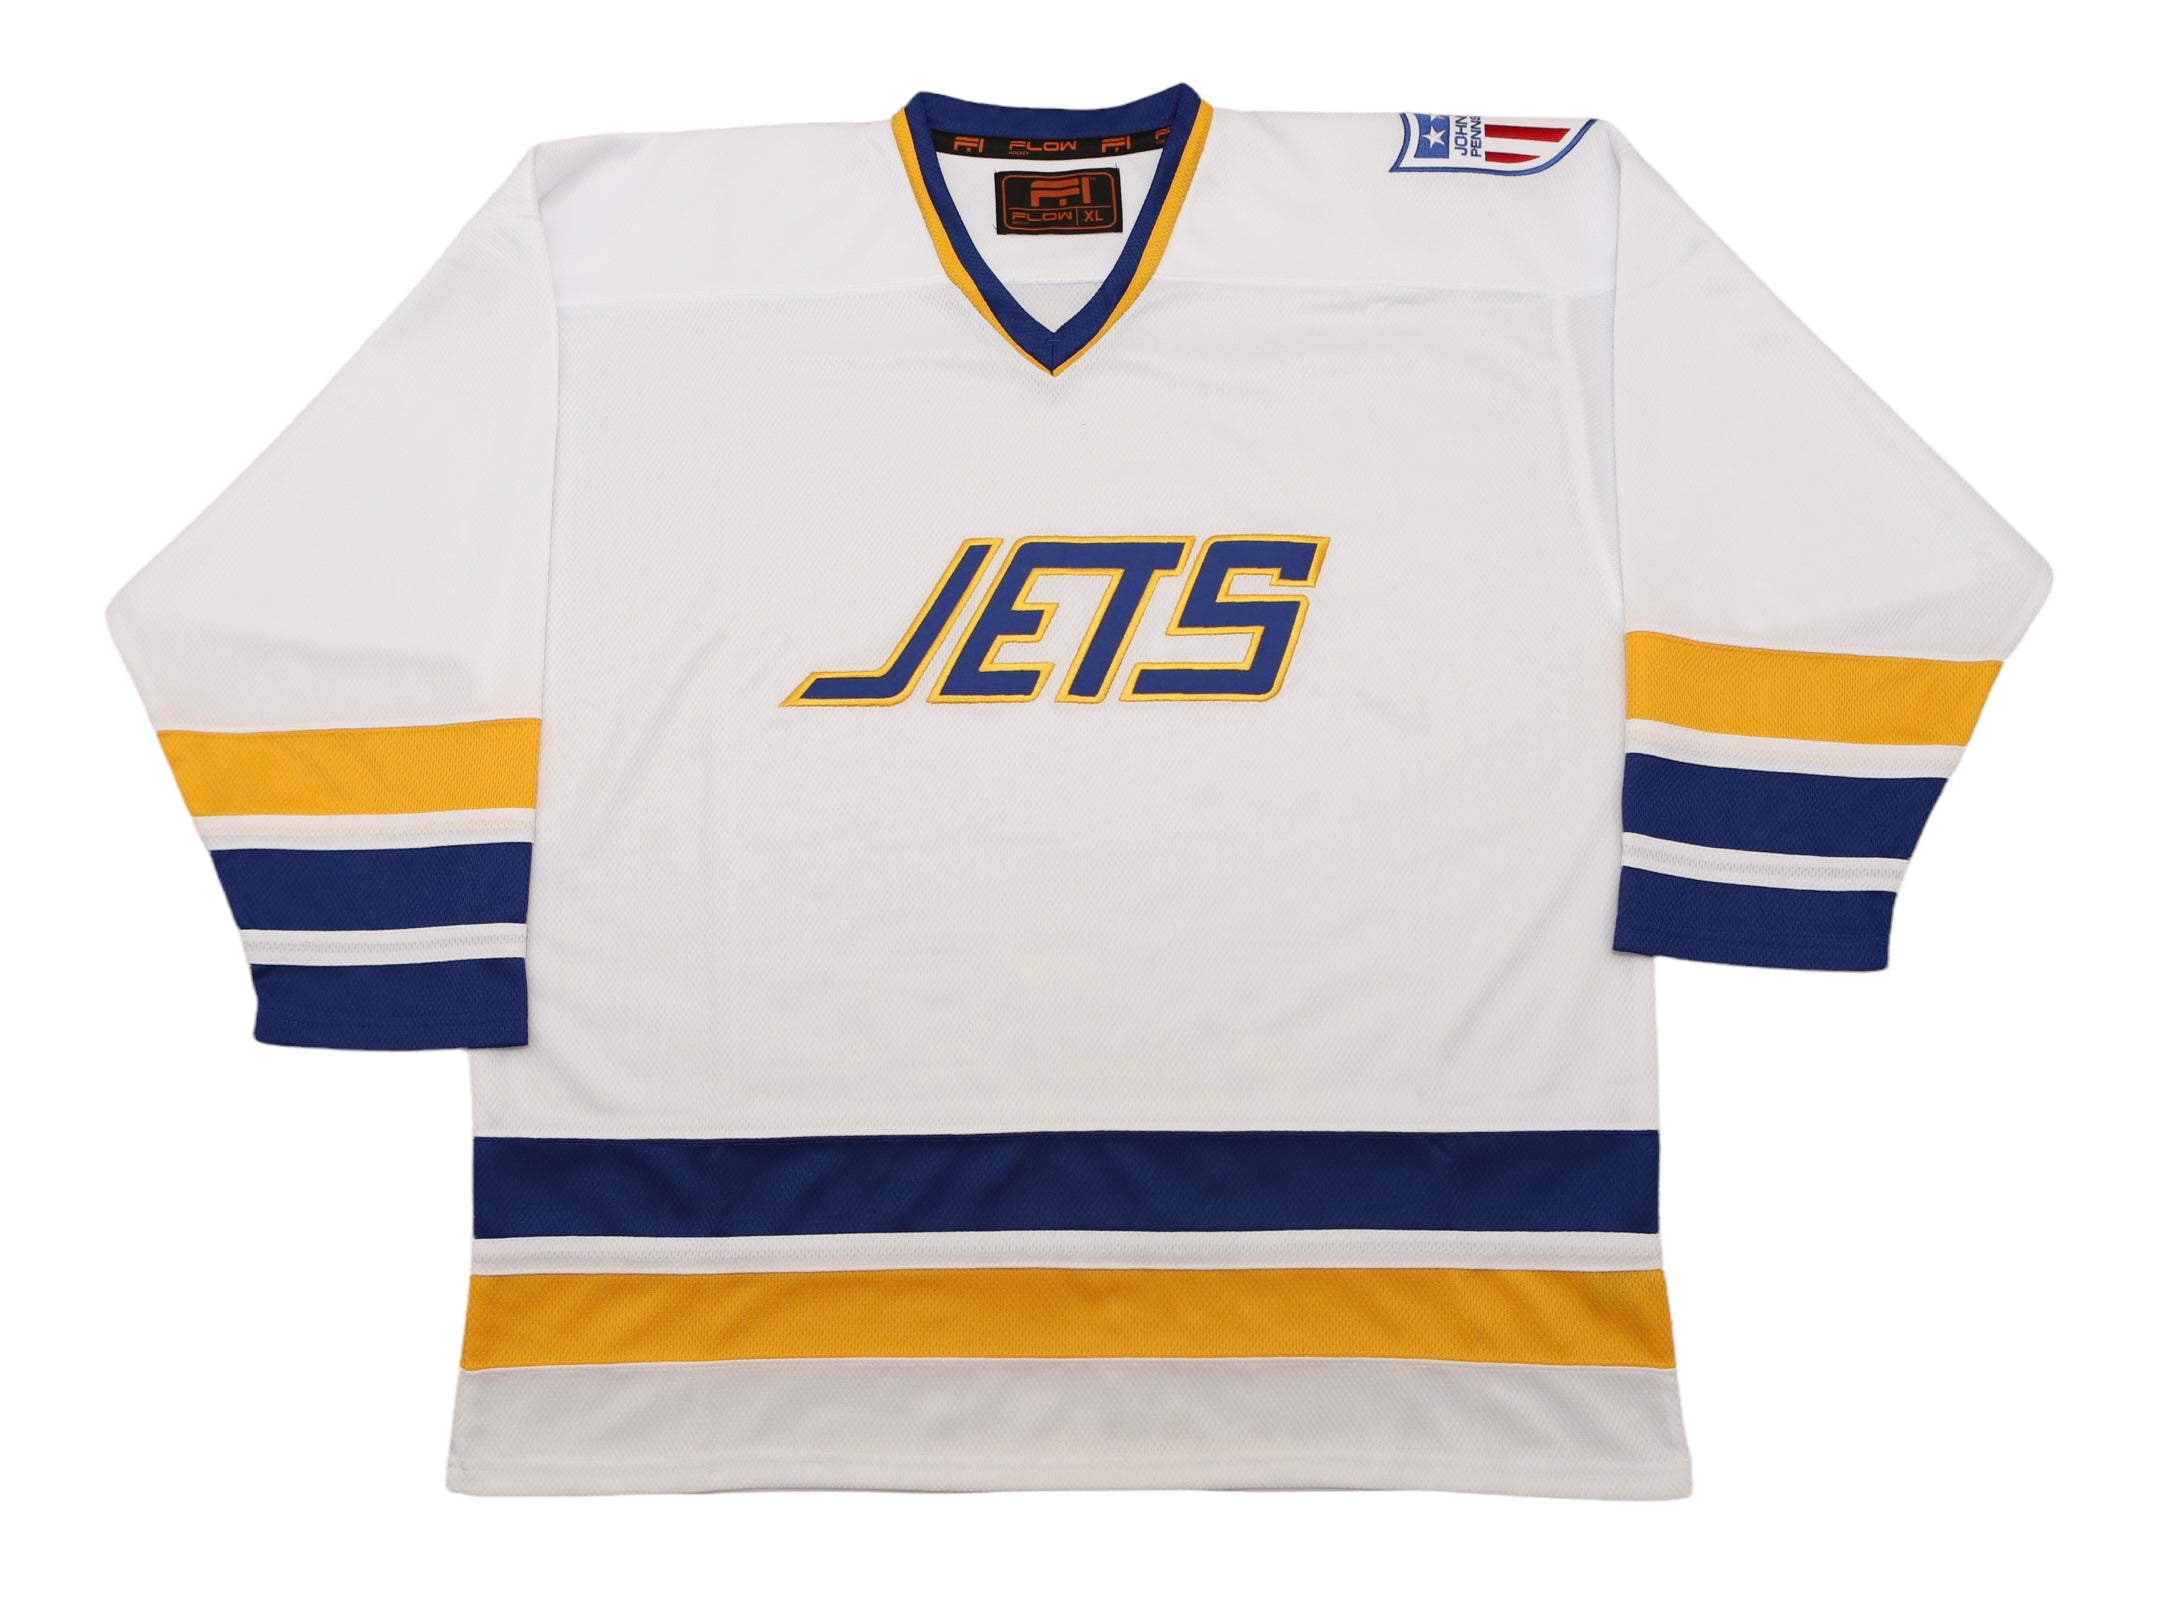 Winnipeg Jets Throwback / Alternate Concept! : r/hockey